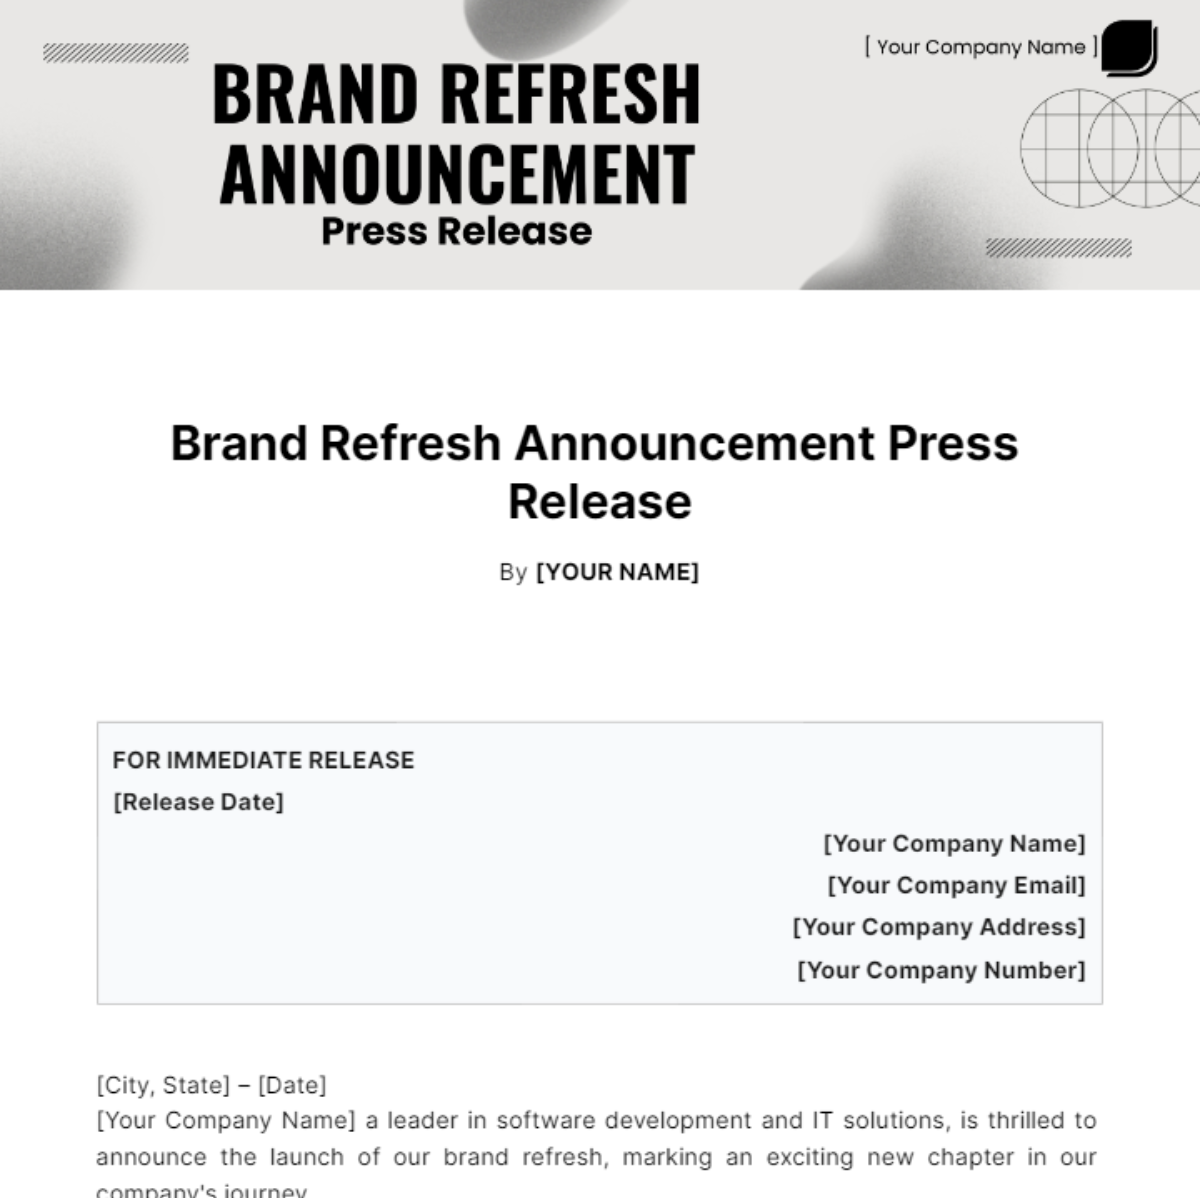 Brand Refresh Announcement Press Release Template